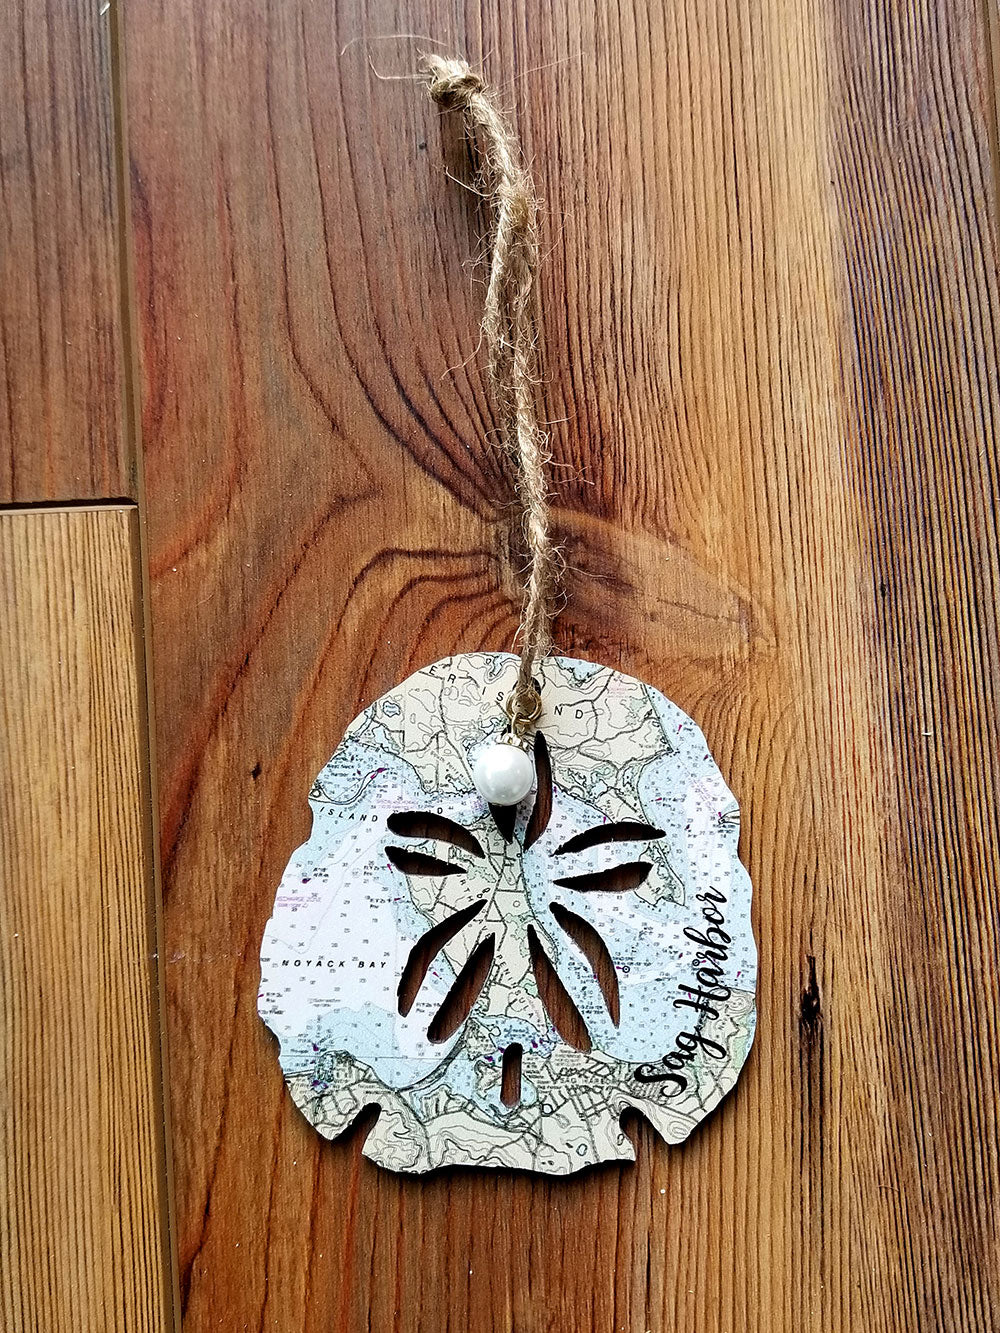 Sag Harbor, NY Sanddollar Ornament